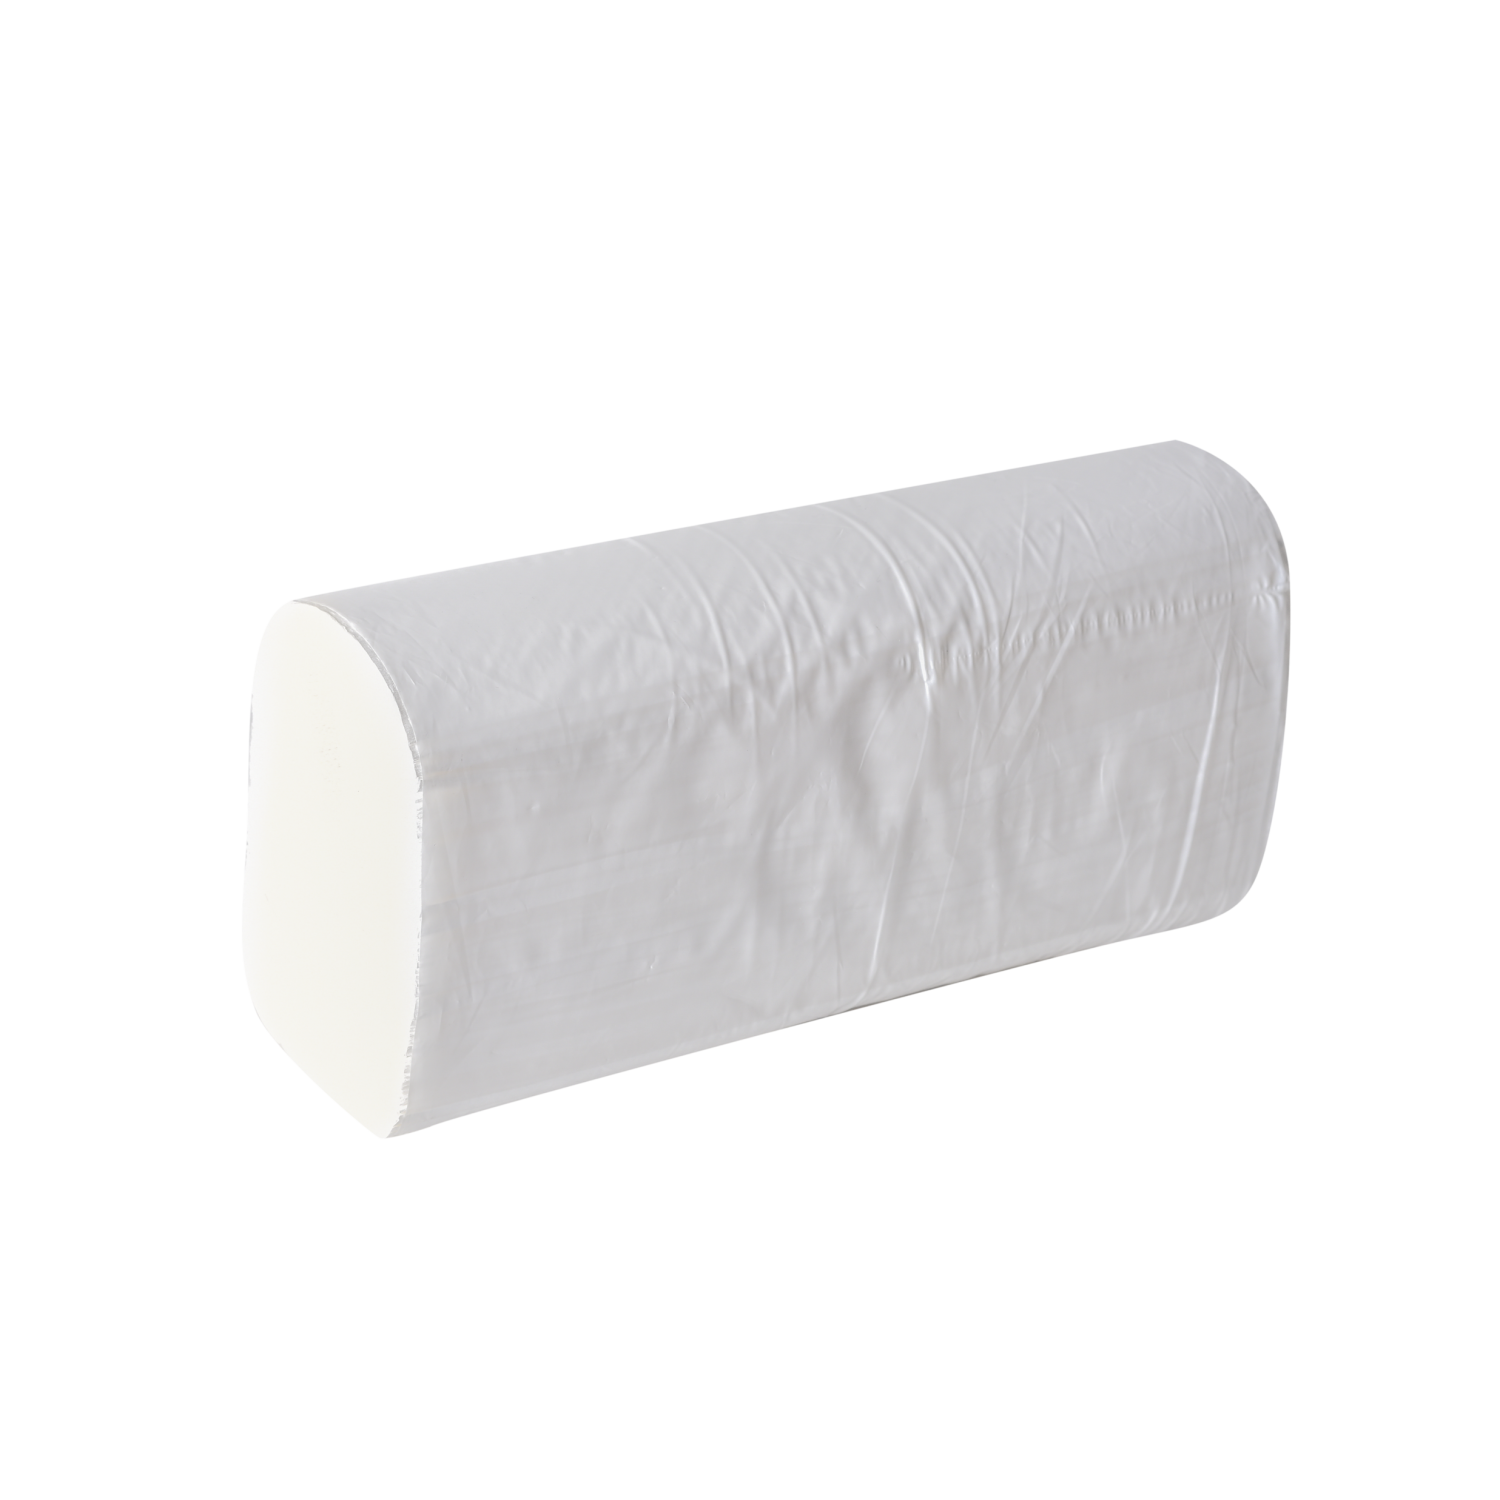 Tissue Hand Towel Royalty Premium Putih Recycle 6037 - tissueku - tissueku